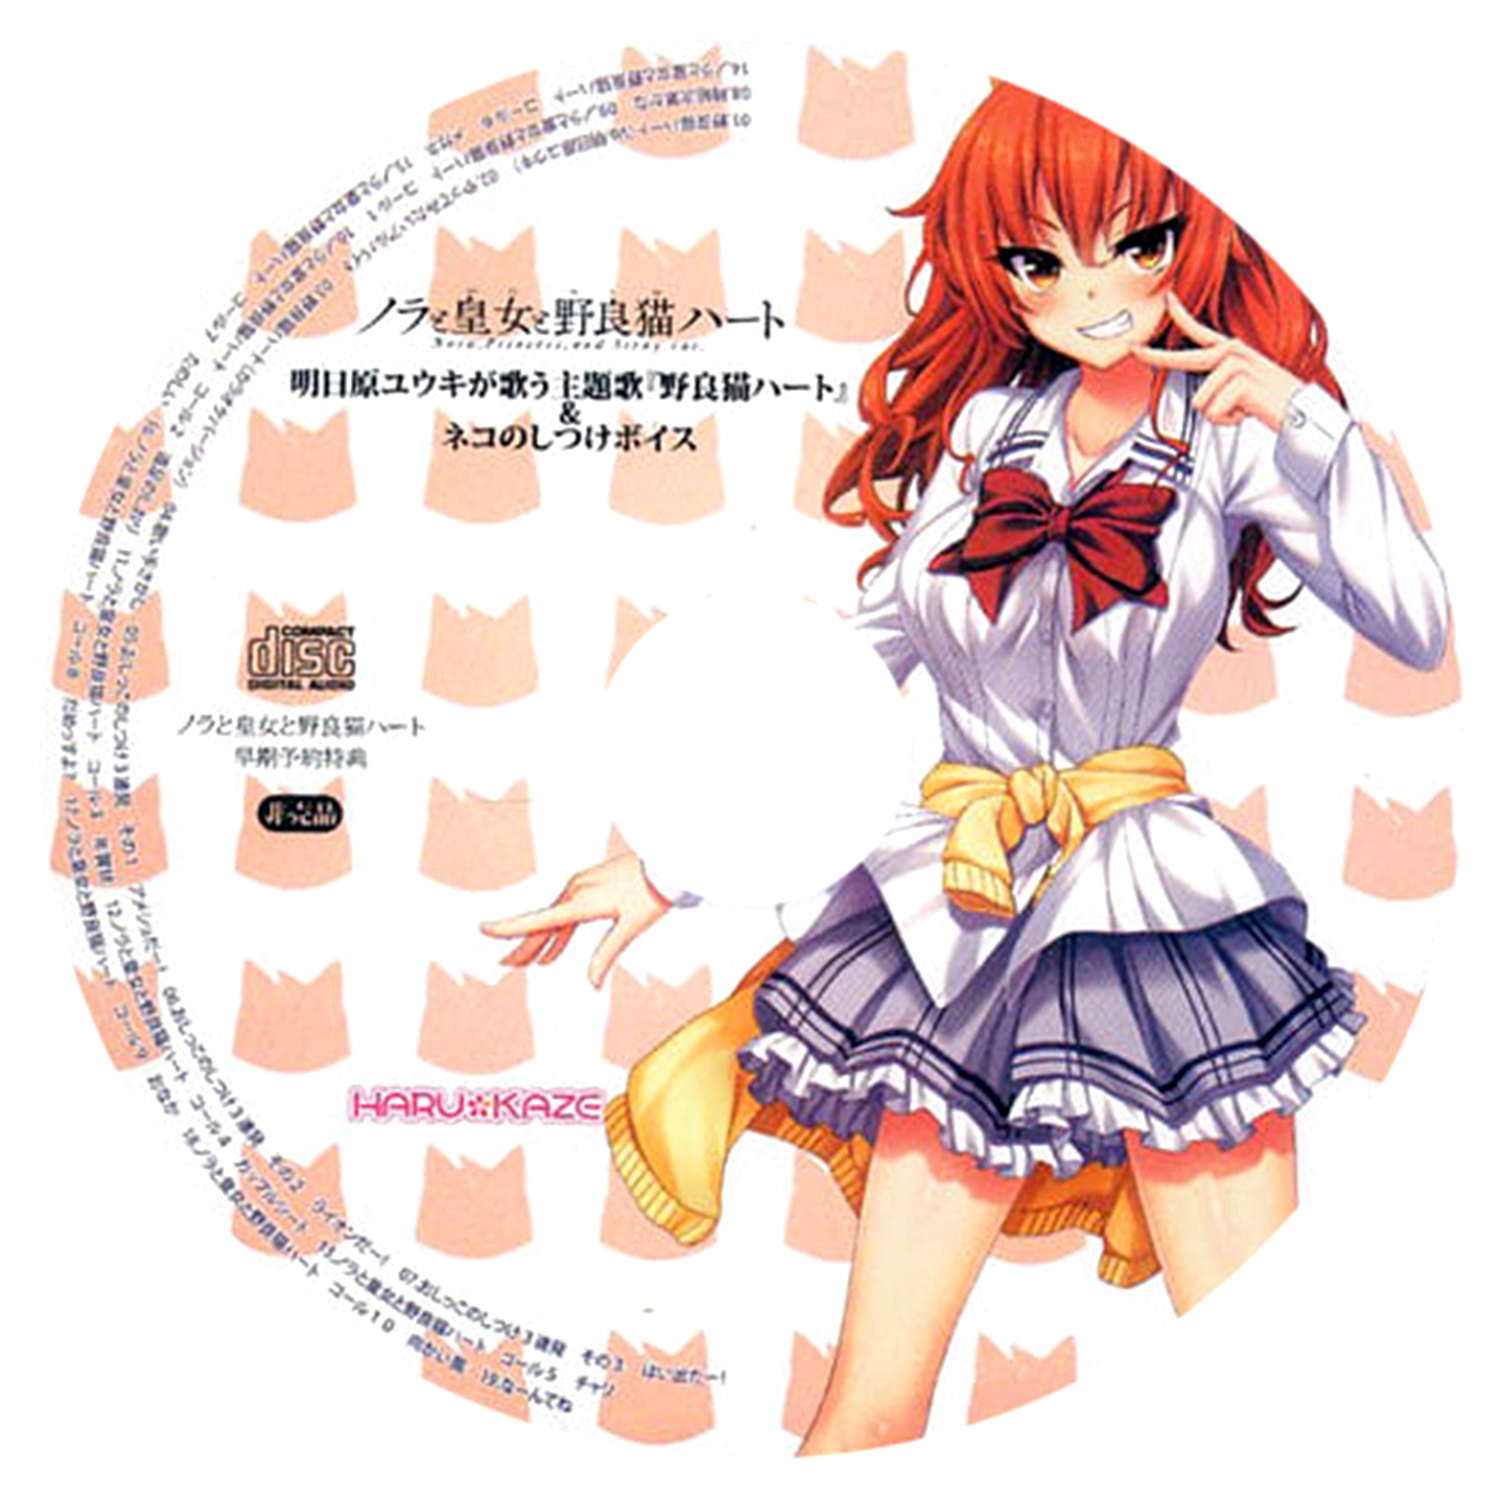 【WAV】ゲーム「ノラと皇女と野良猫ハート」Yuki Asuhara Theme Song「野良猫ハート」／HARUKAZE